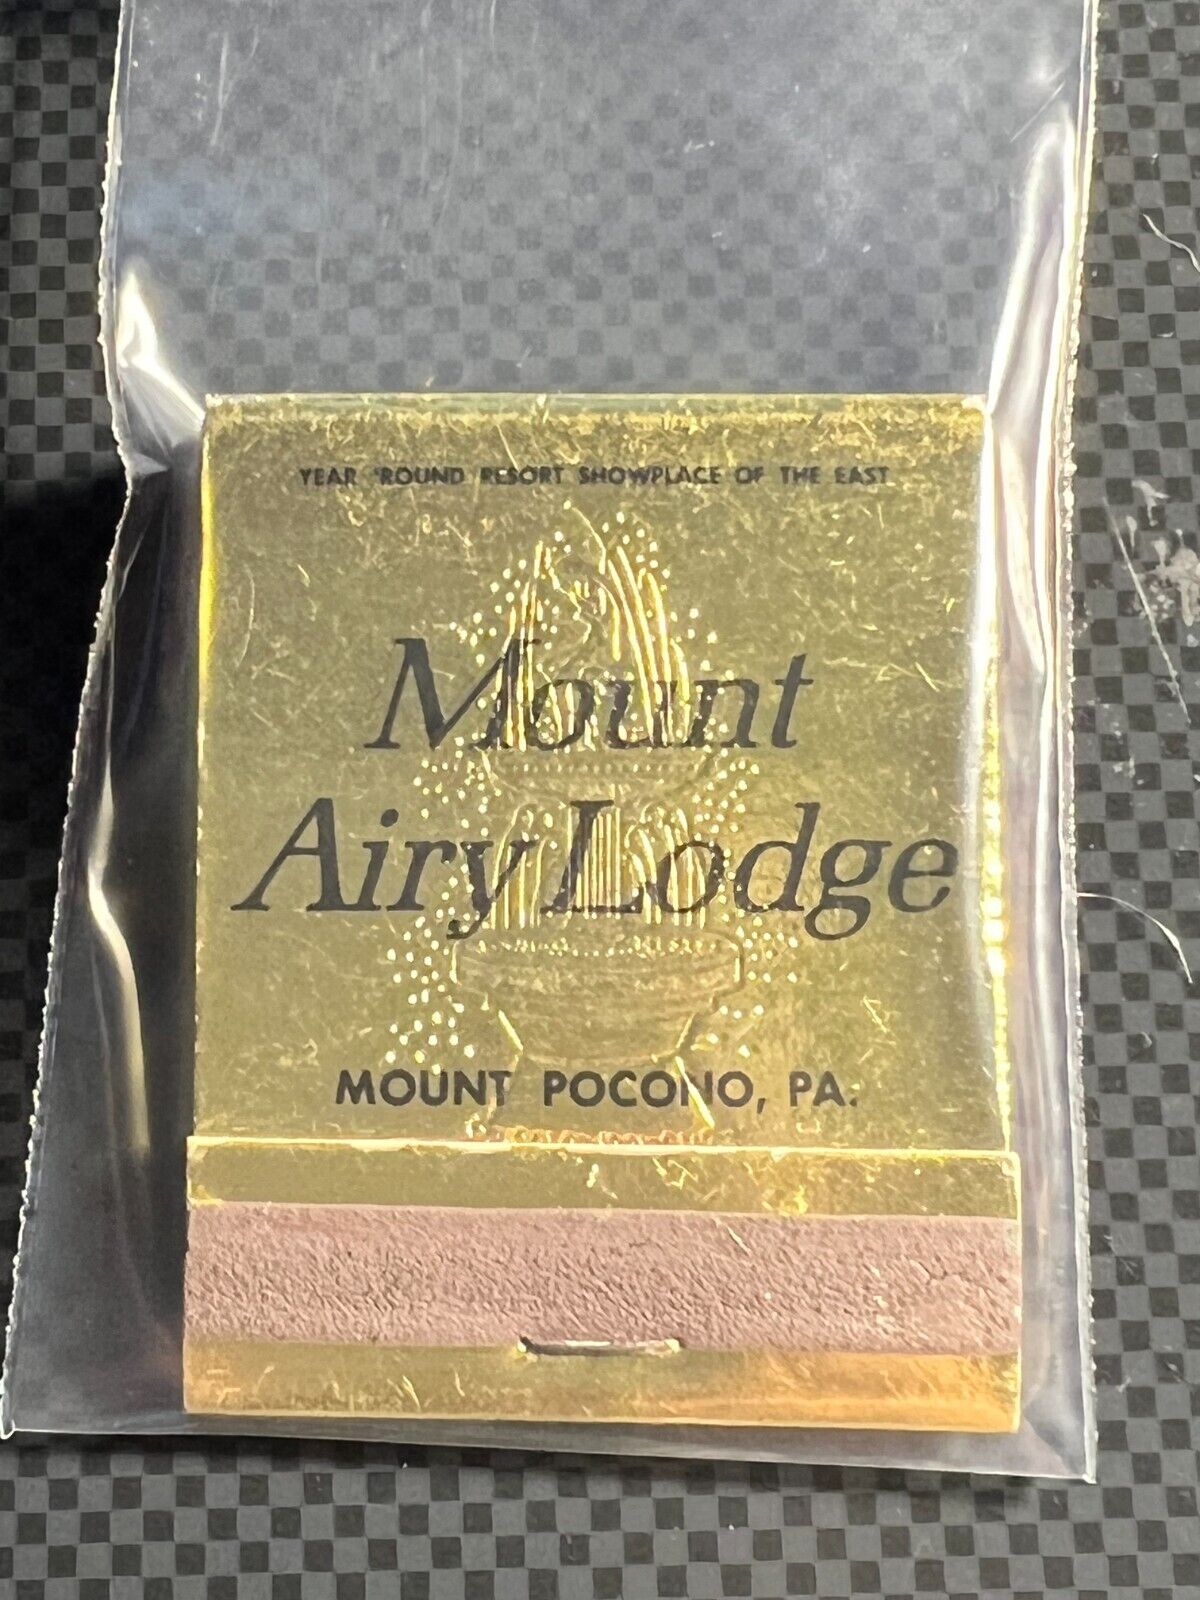 VINTAGE MATCHBOOK - MOUNT AIRY LODGE - MOUNT POCONO, PA - STRUCK